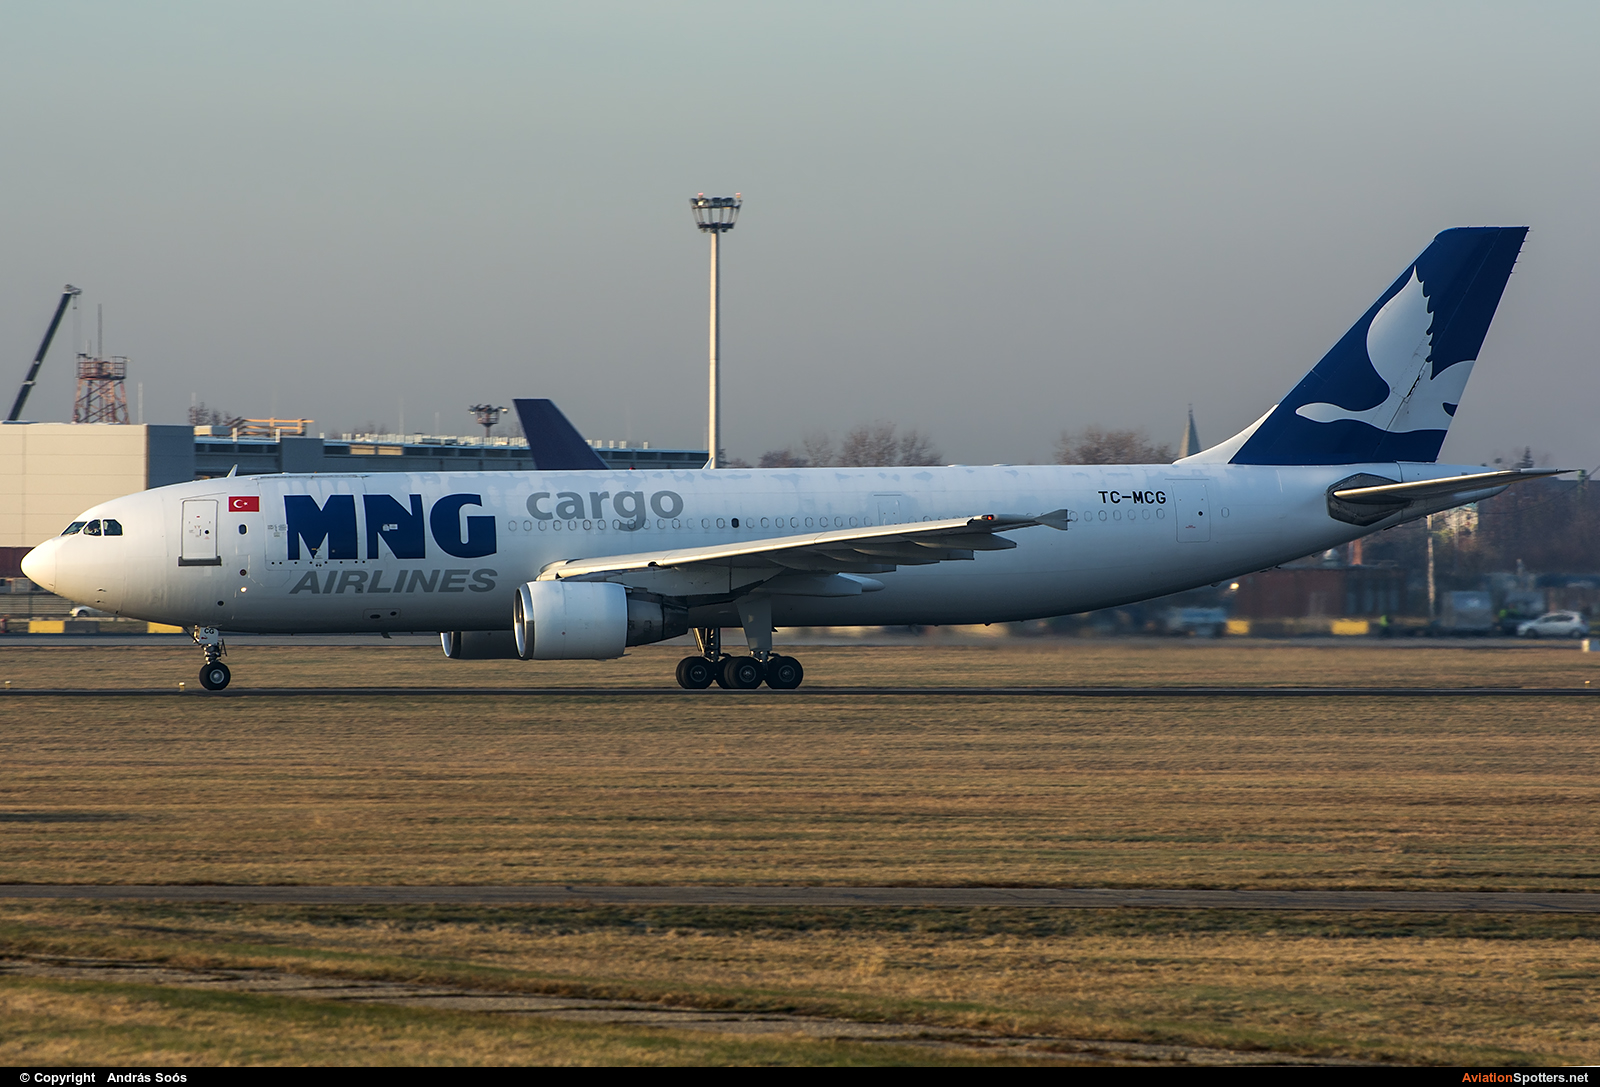 MNG Cargo  -  A300  (TC-MCG) By András Soós (sas1965)